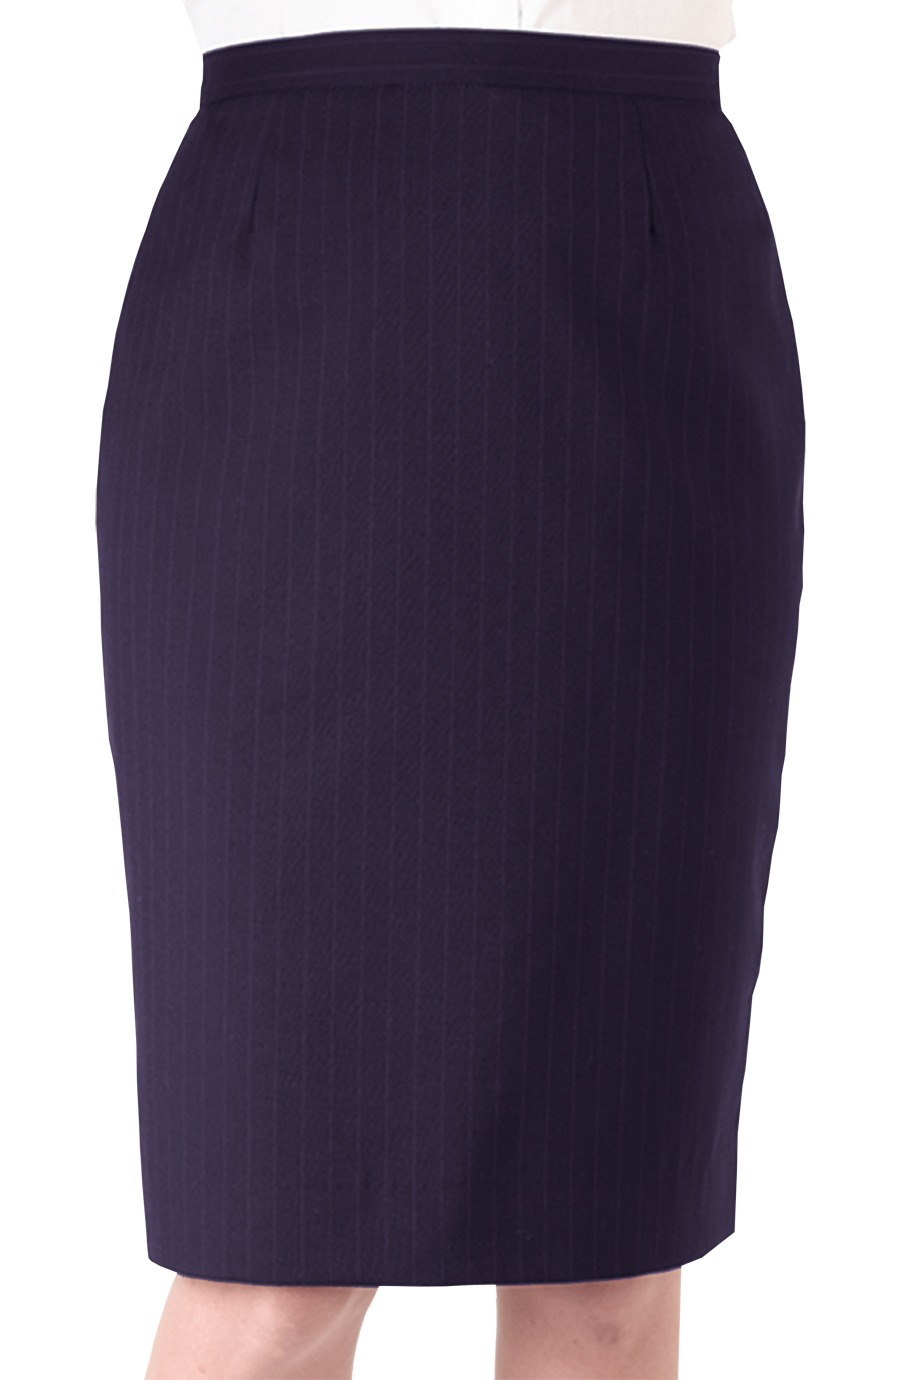 Edwards Garment 9769 - Women's Pinstripe Skirt